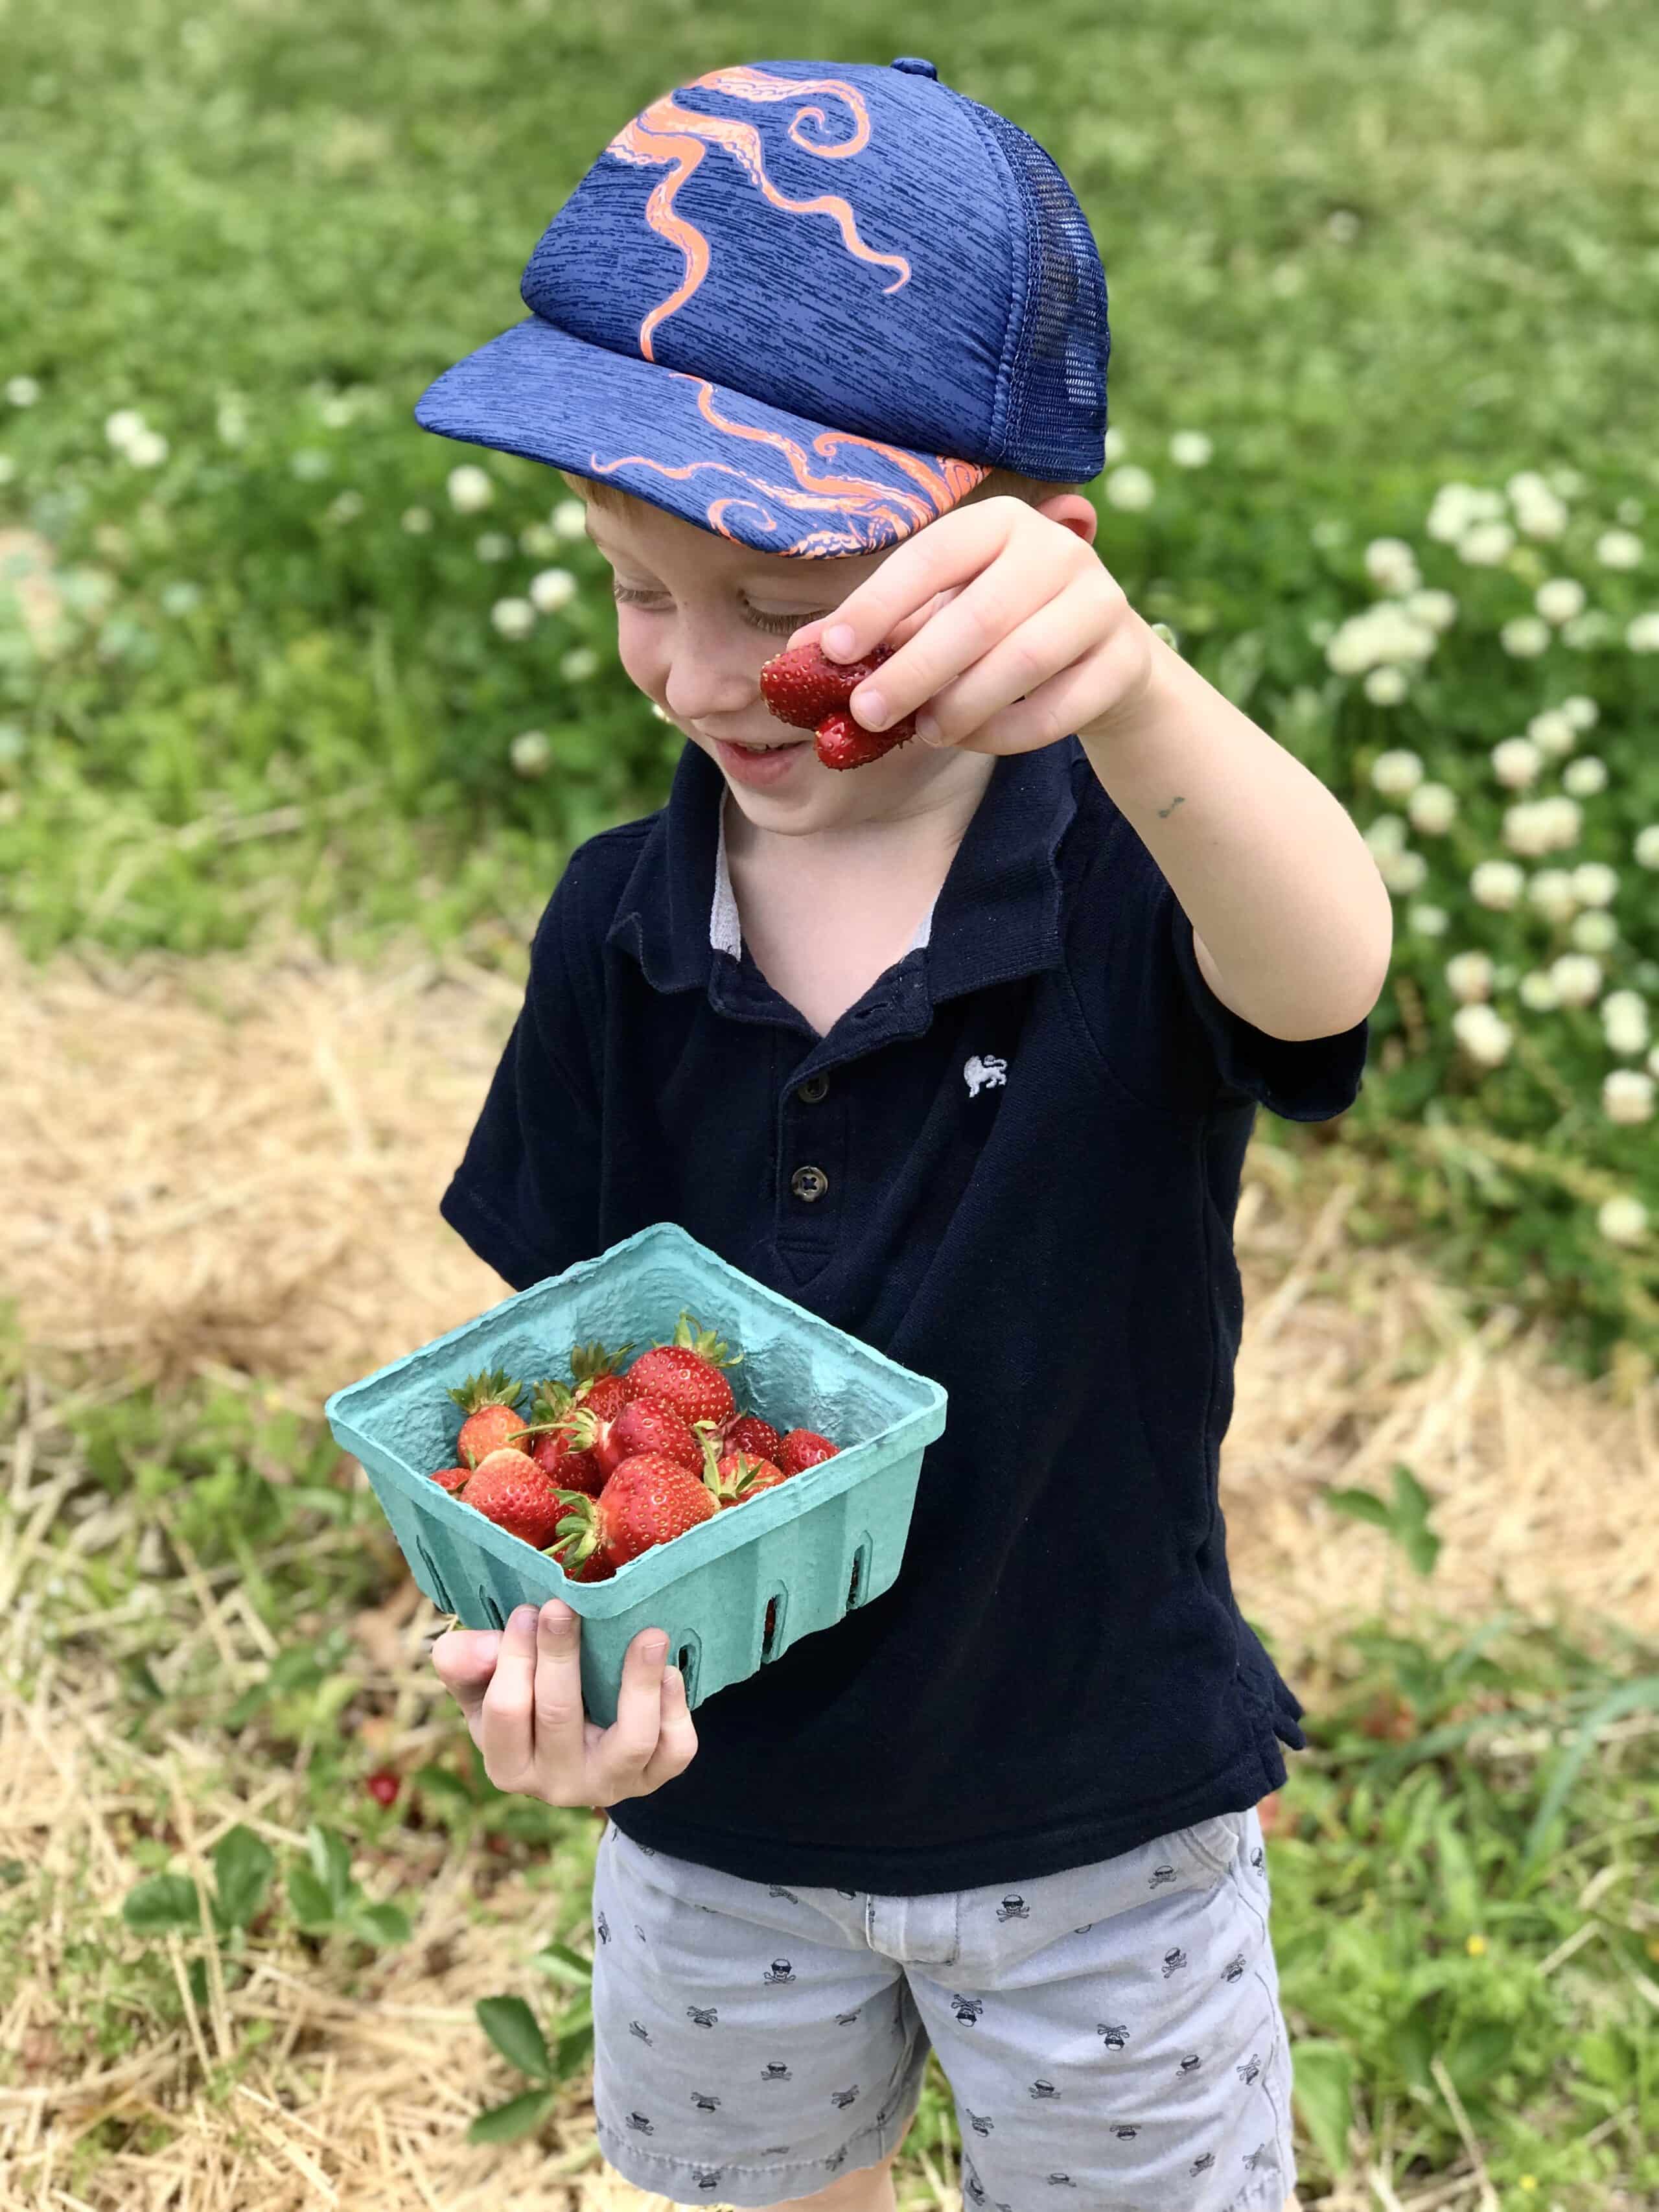 C.N. Smith Farm strawberry picking in East Bridgewater, Massachusetts